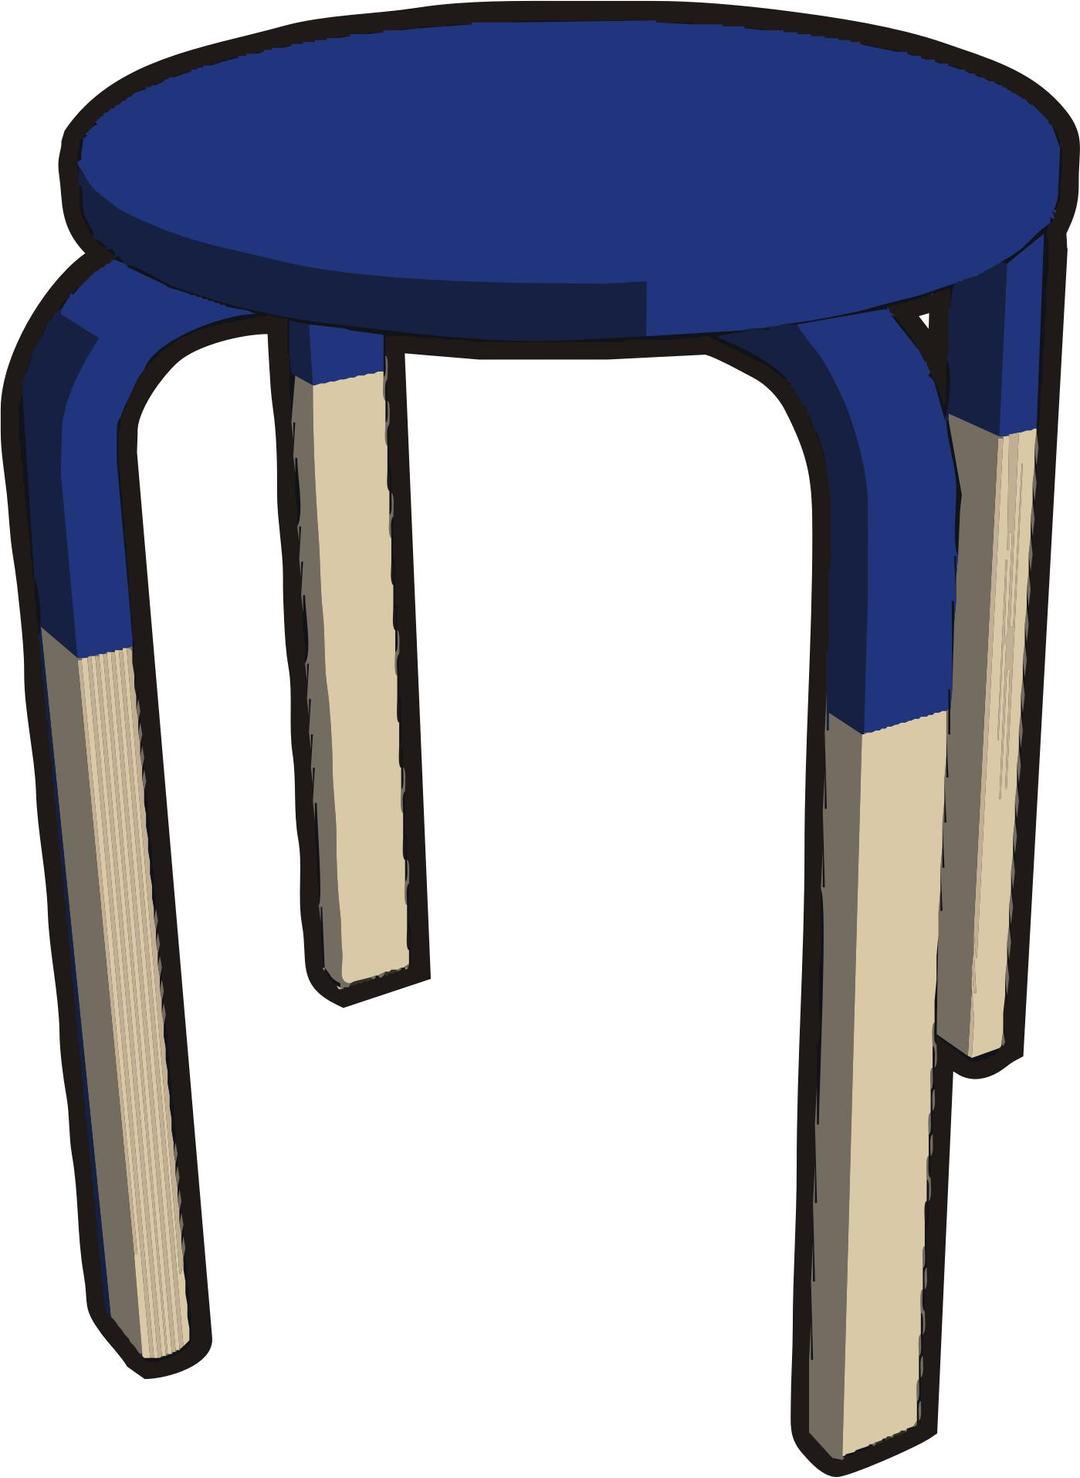 Ikea stuff - Frosta stool, half blue navy png transparent